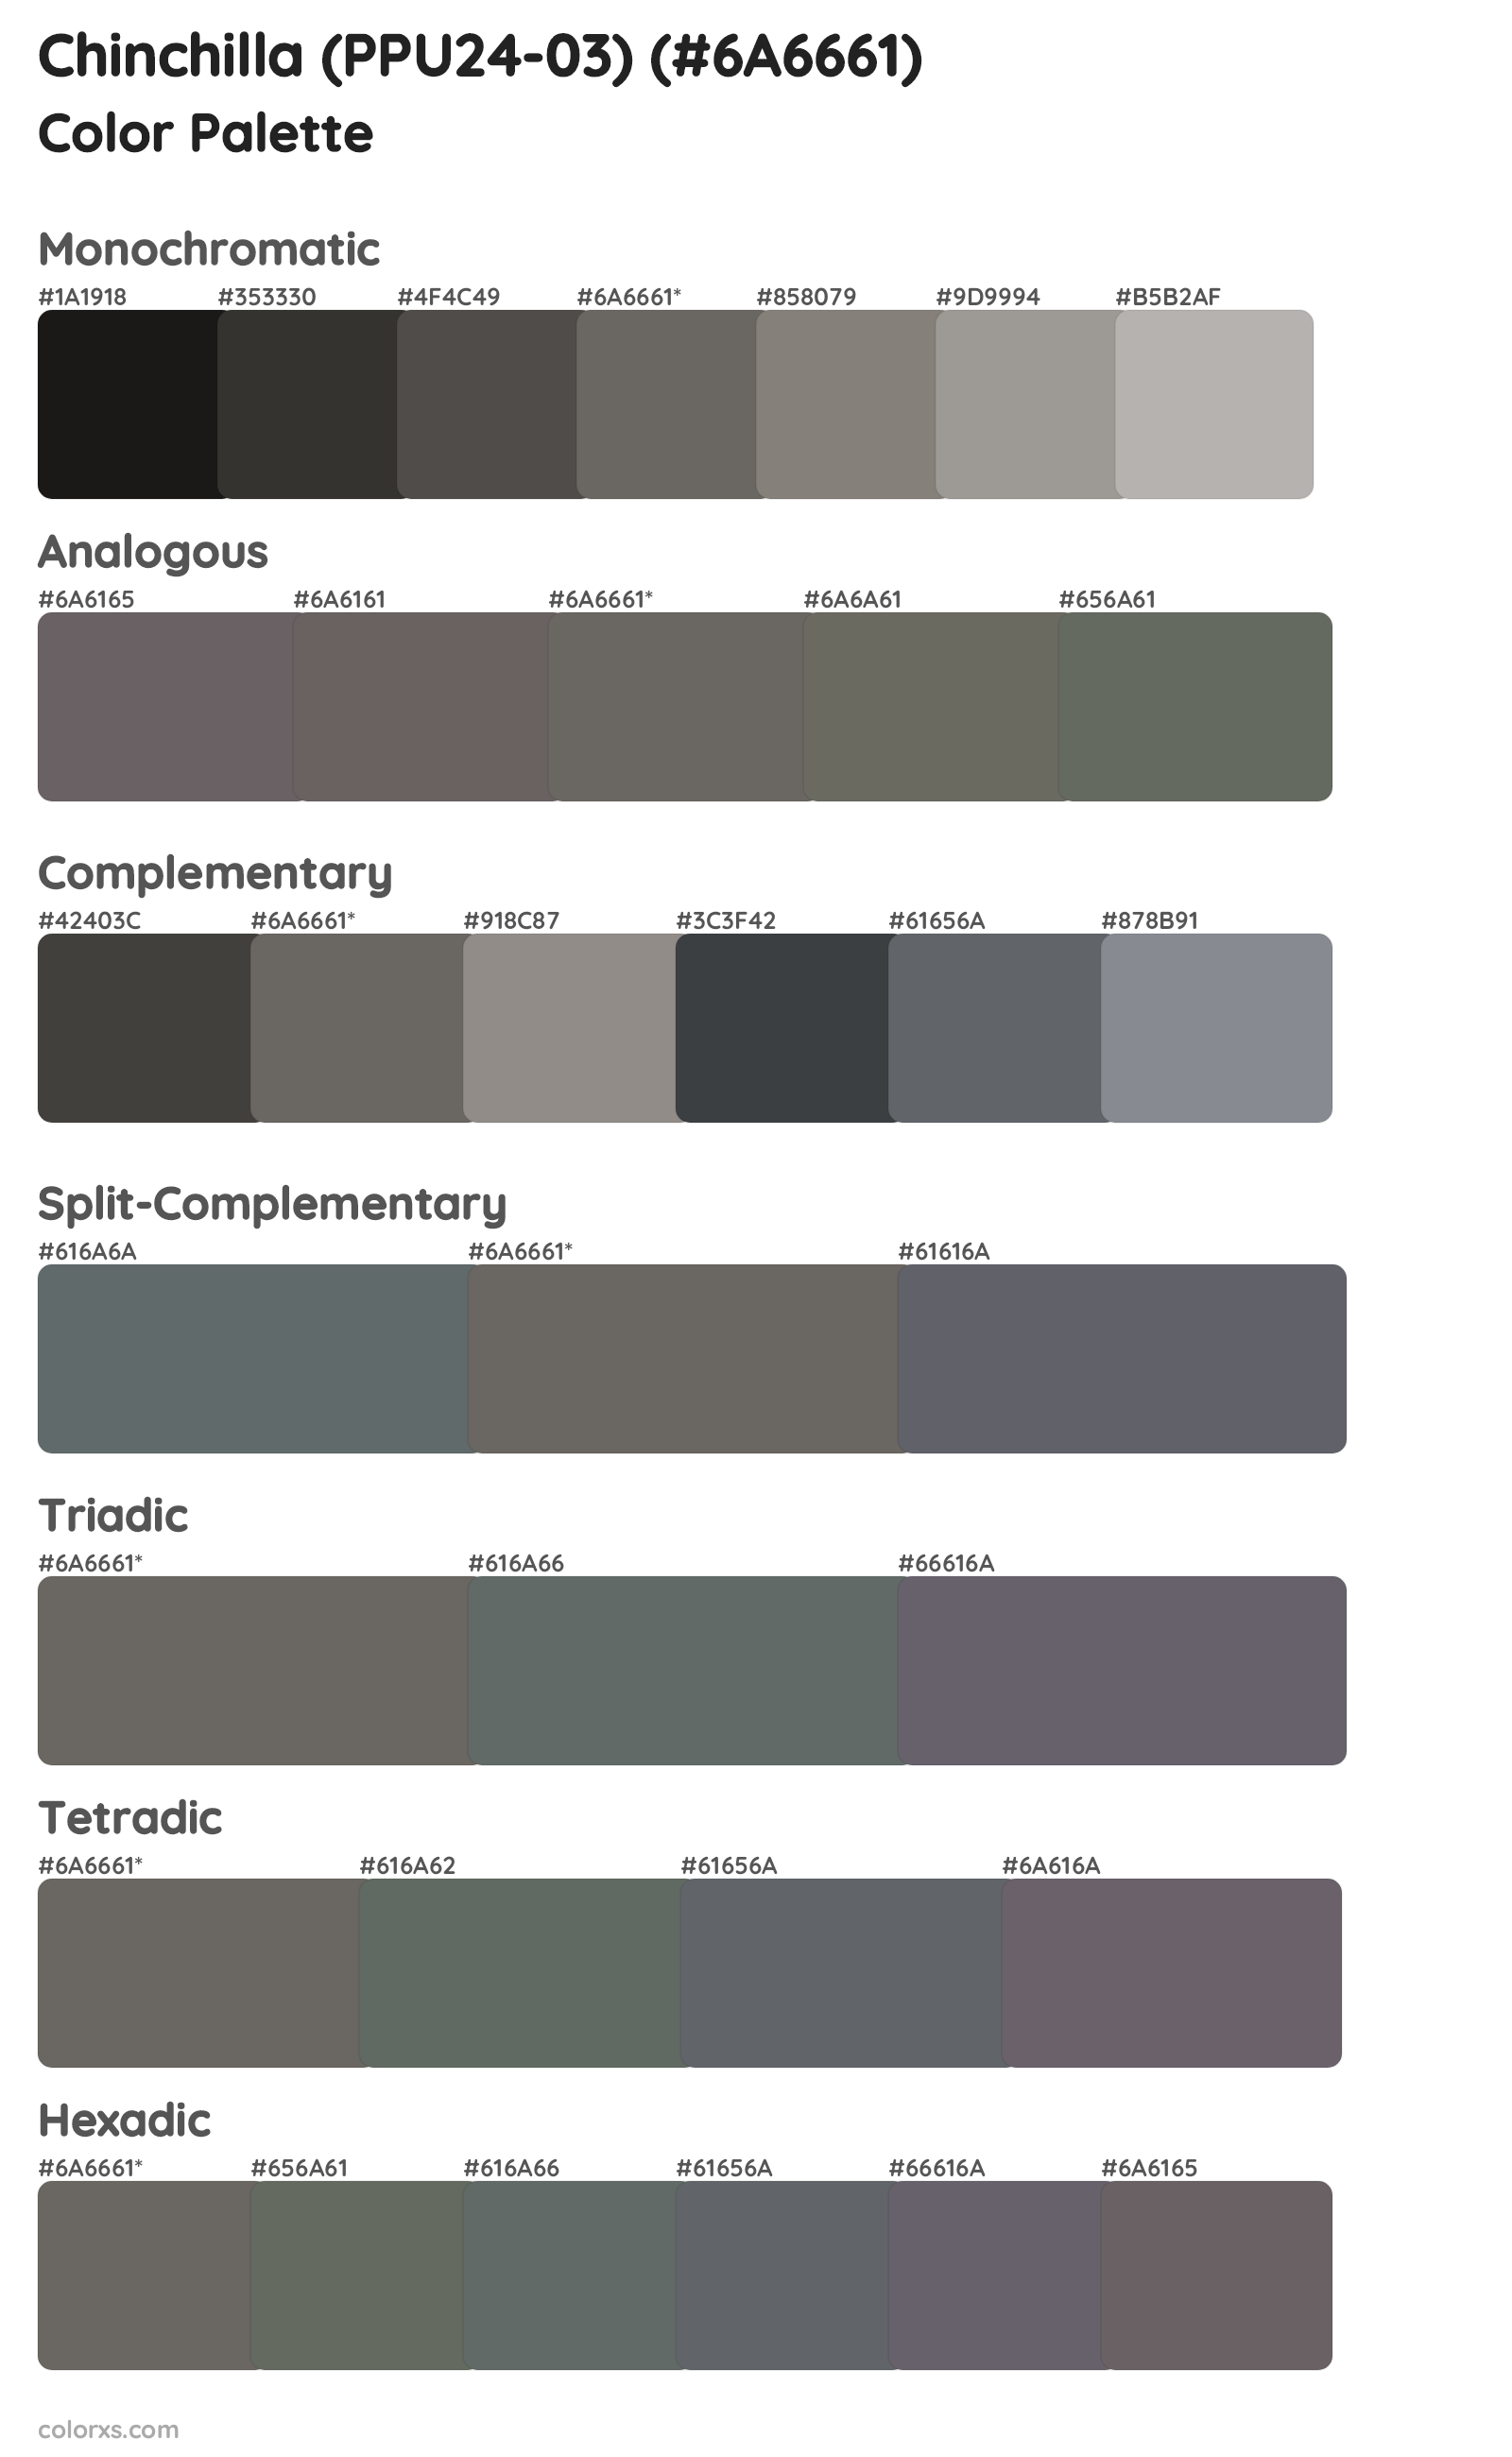 Chinchilla (PPU24-03) Color Scheme Palettes